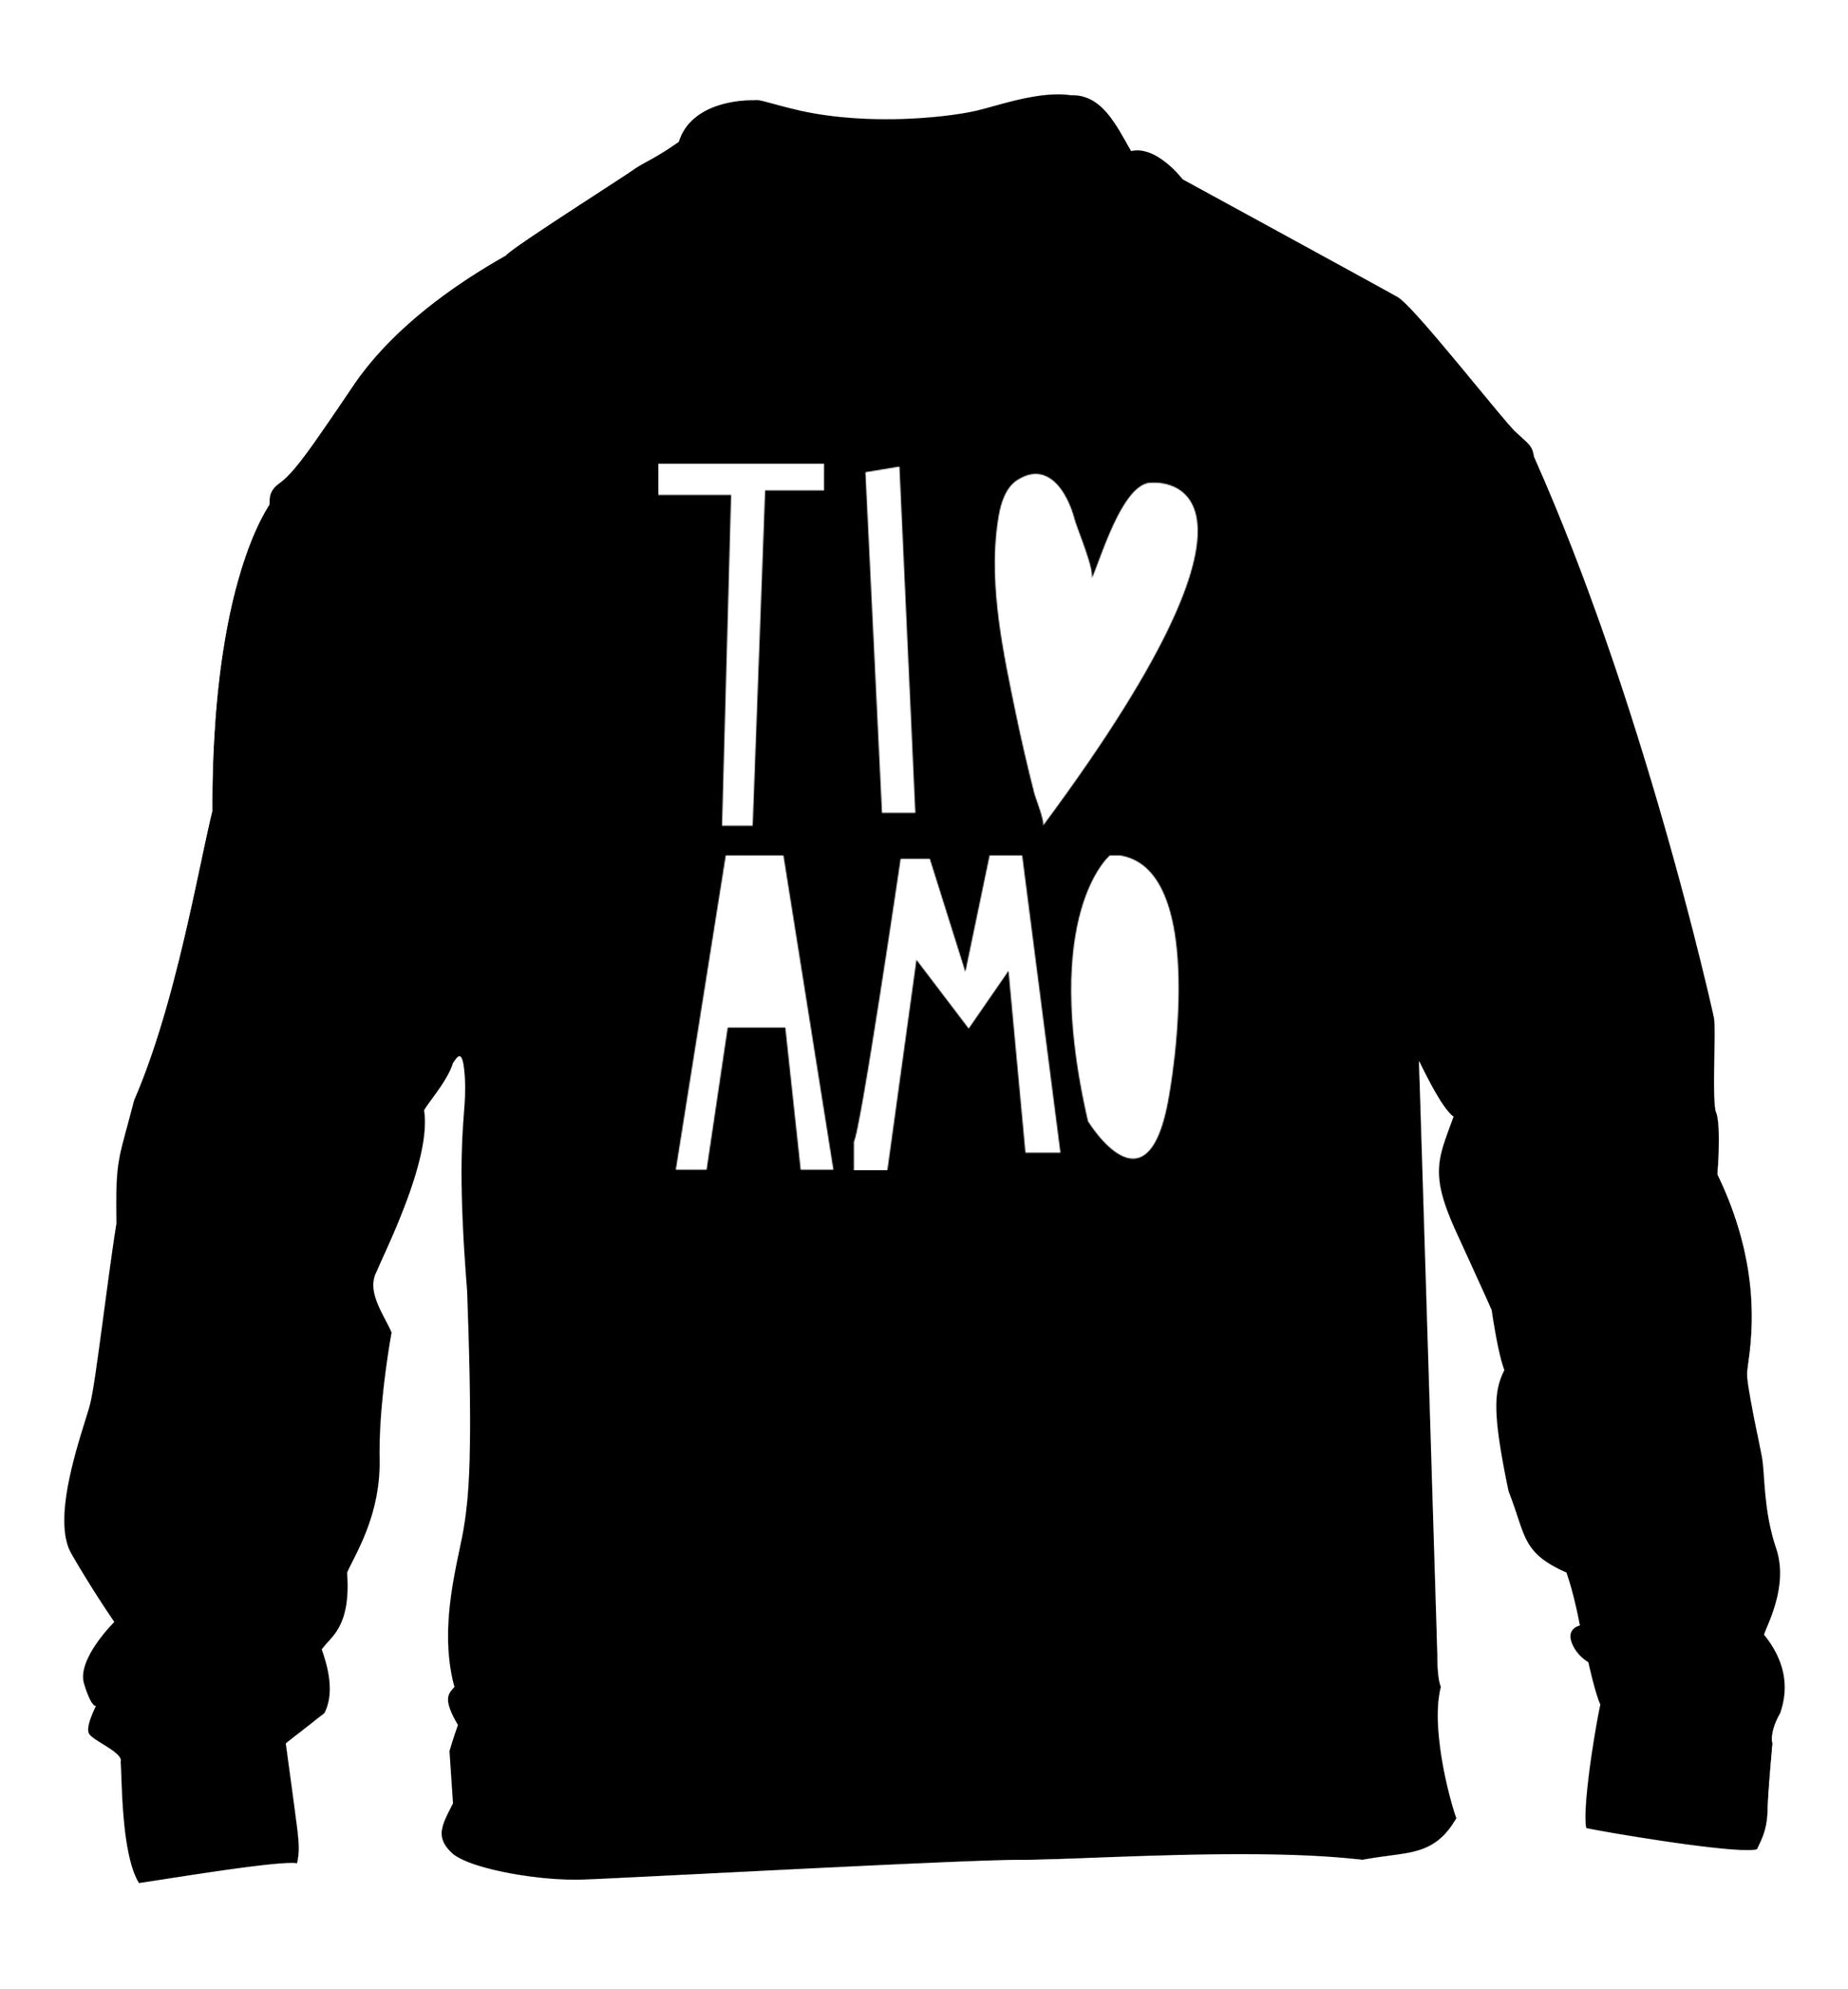 Ti amo - I love you children's black sweater 12-13 Years